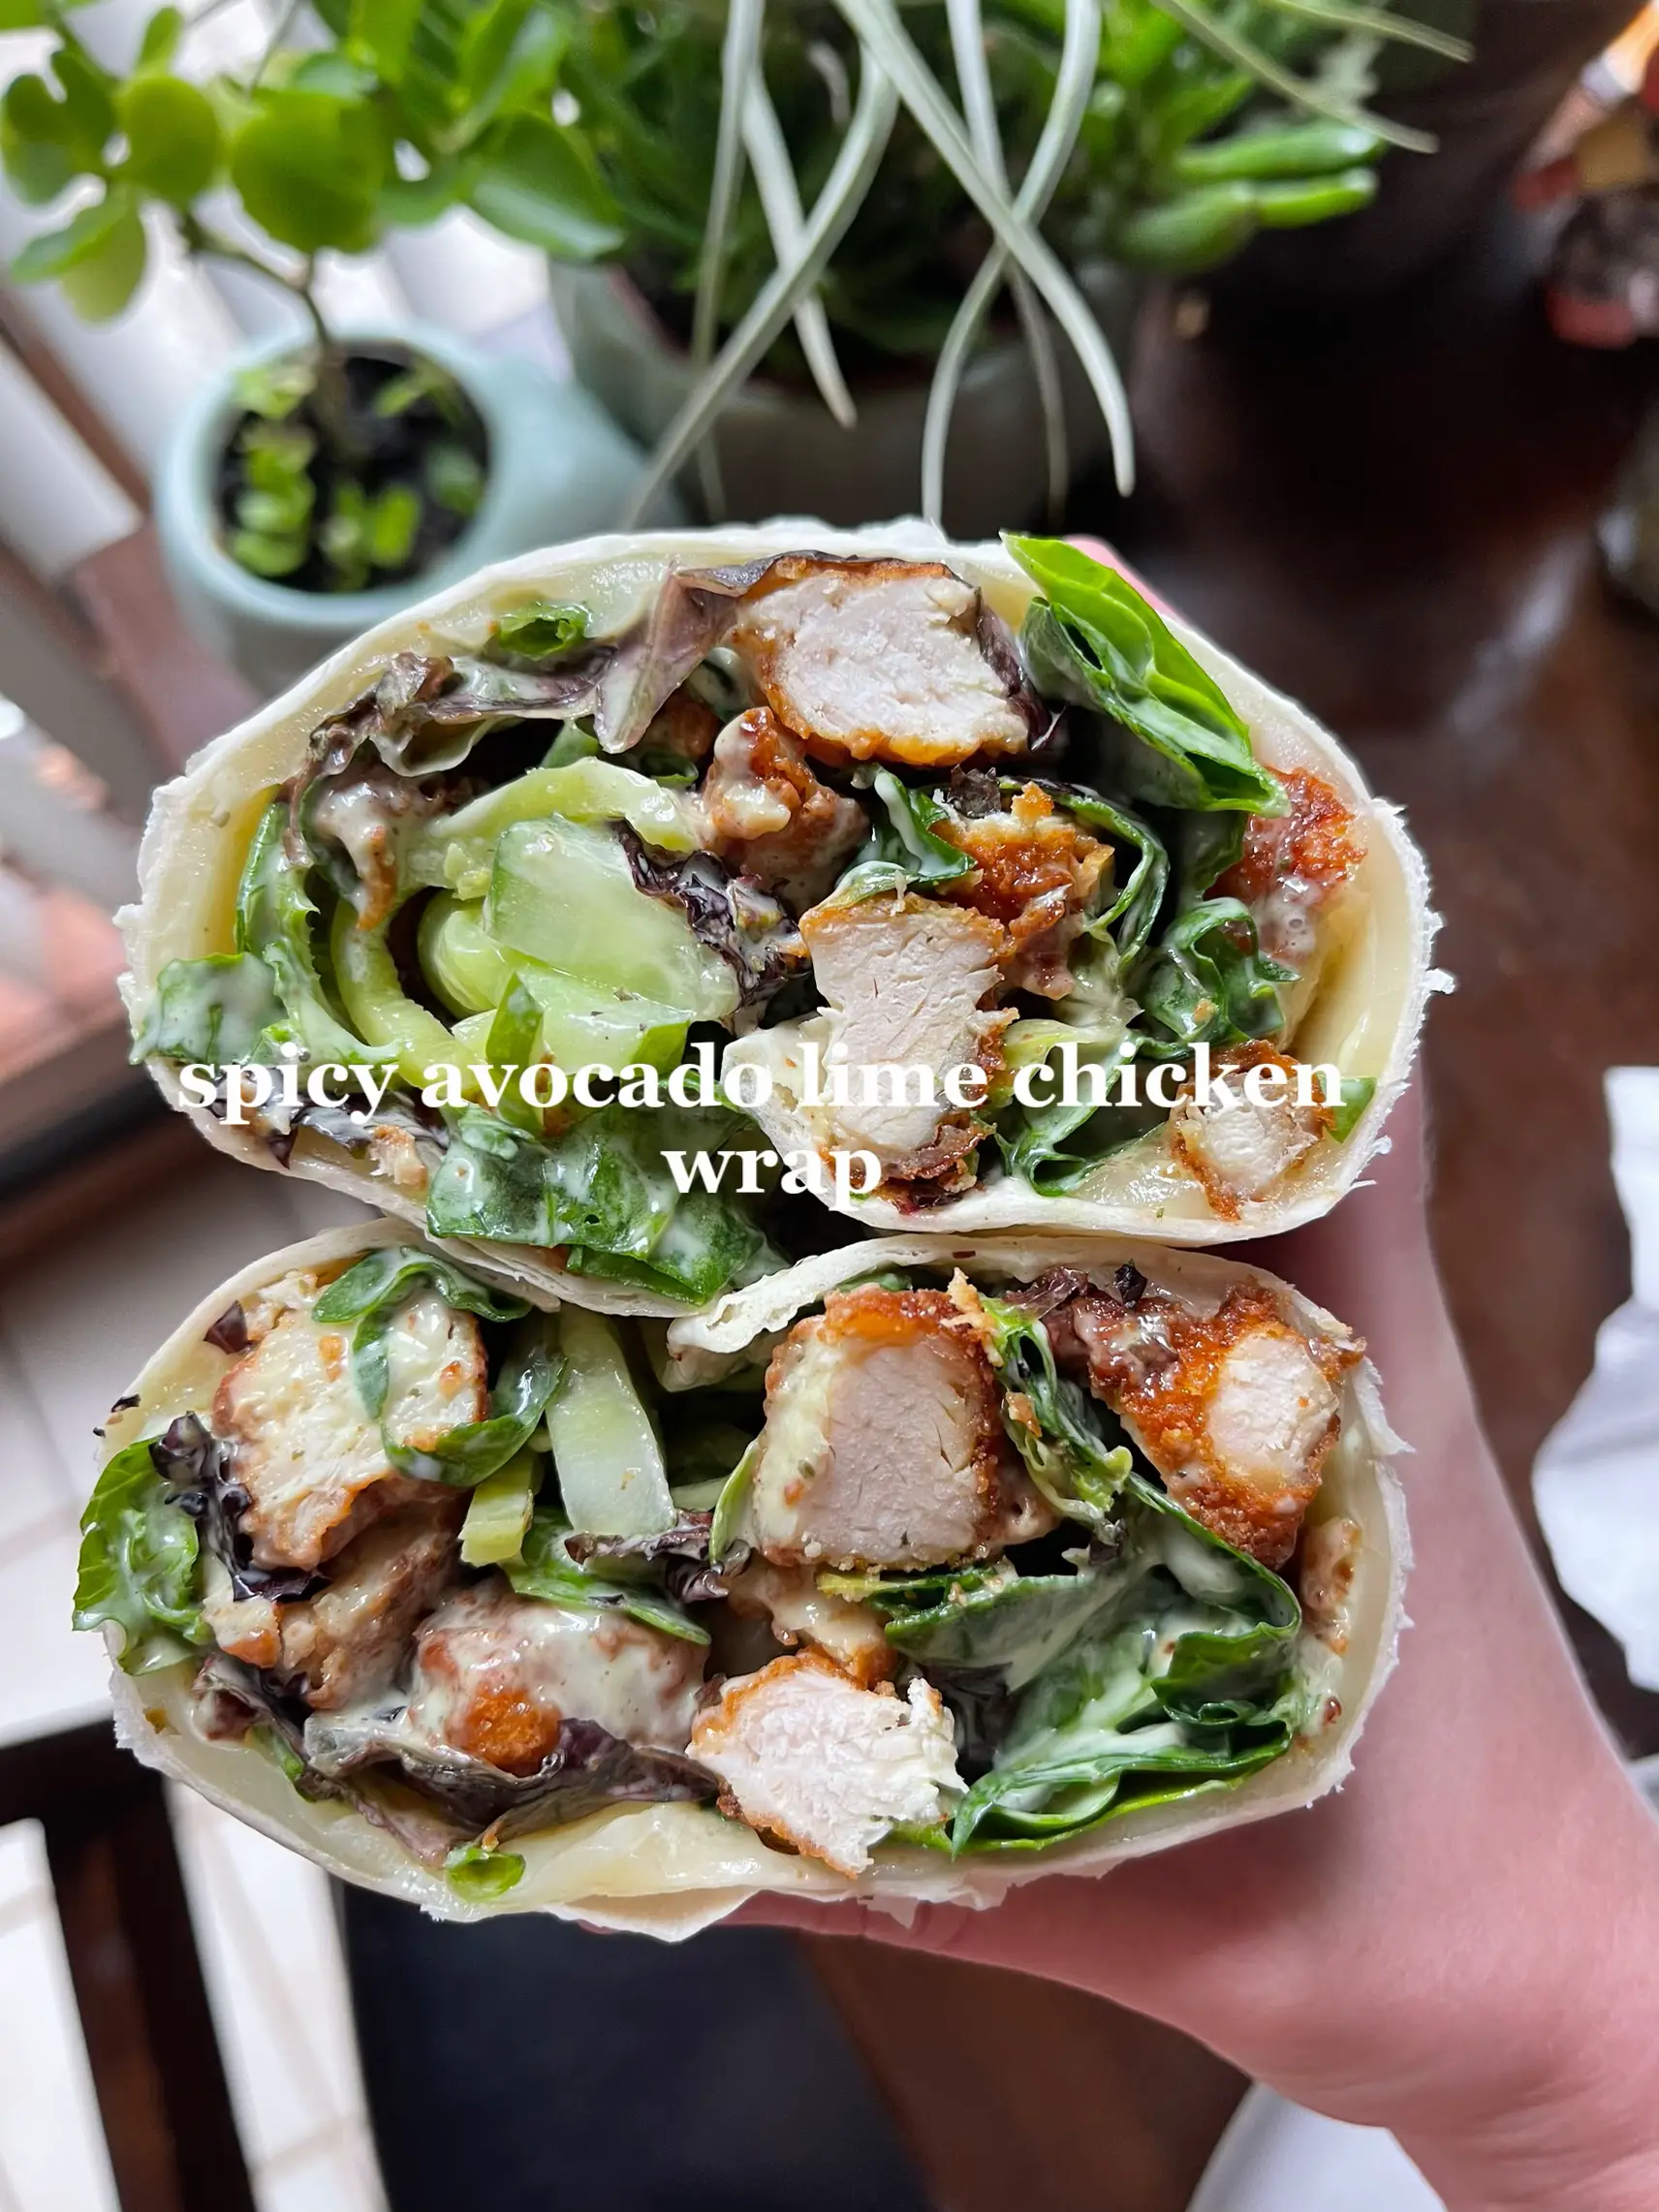 Healthy Chicken Avocado Wraps - Veronika's Kitchen